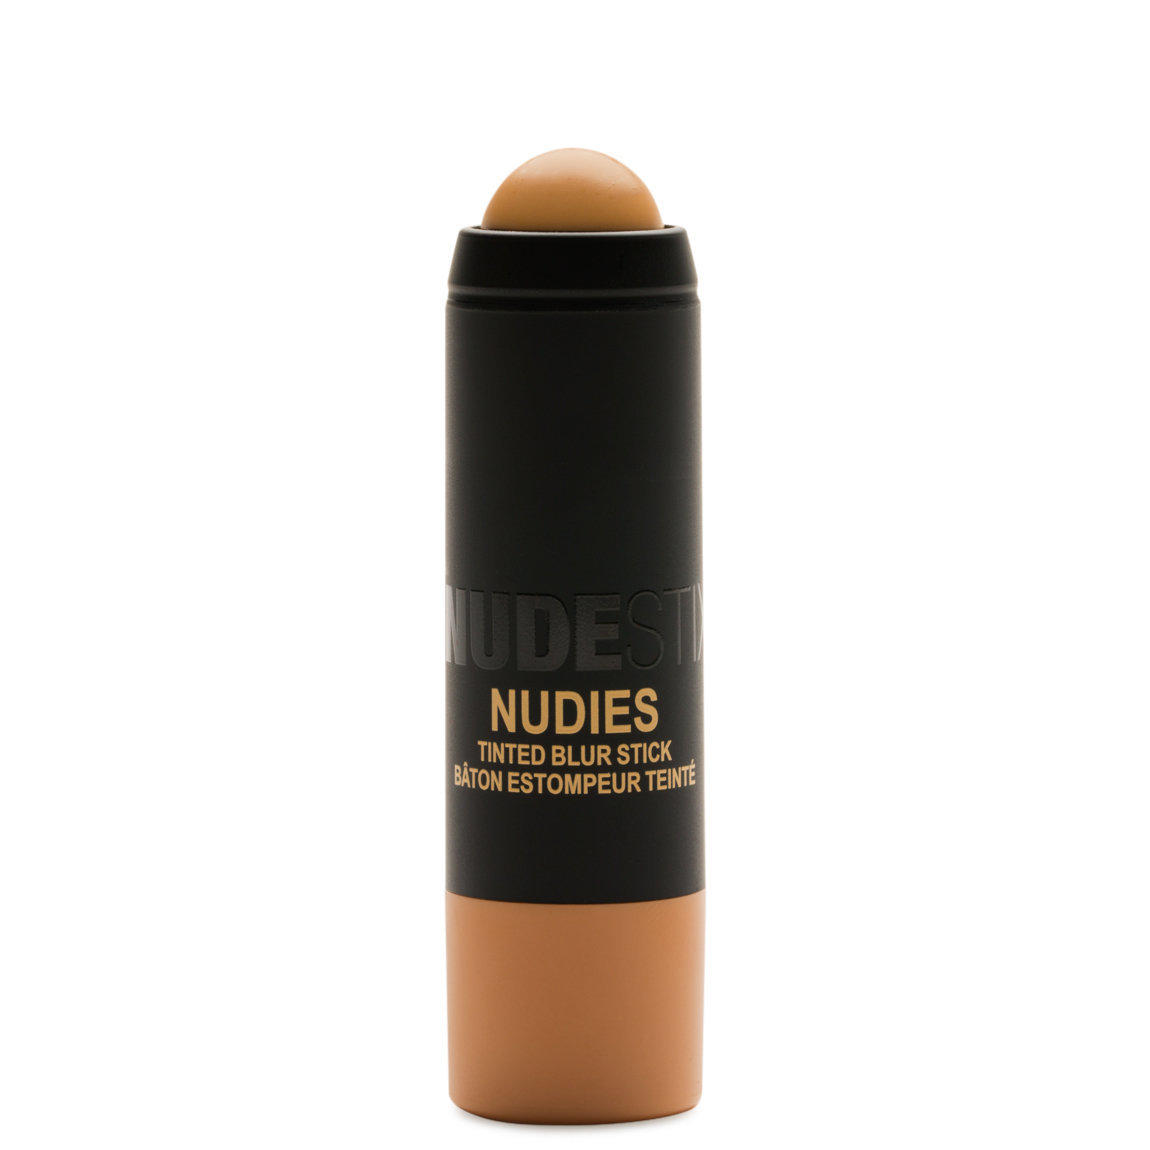 NudeStix Nudies Tinted Blur Stick Medium 5